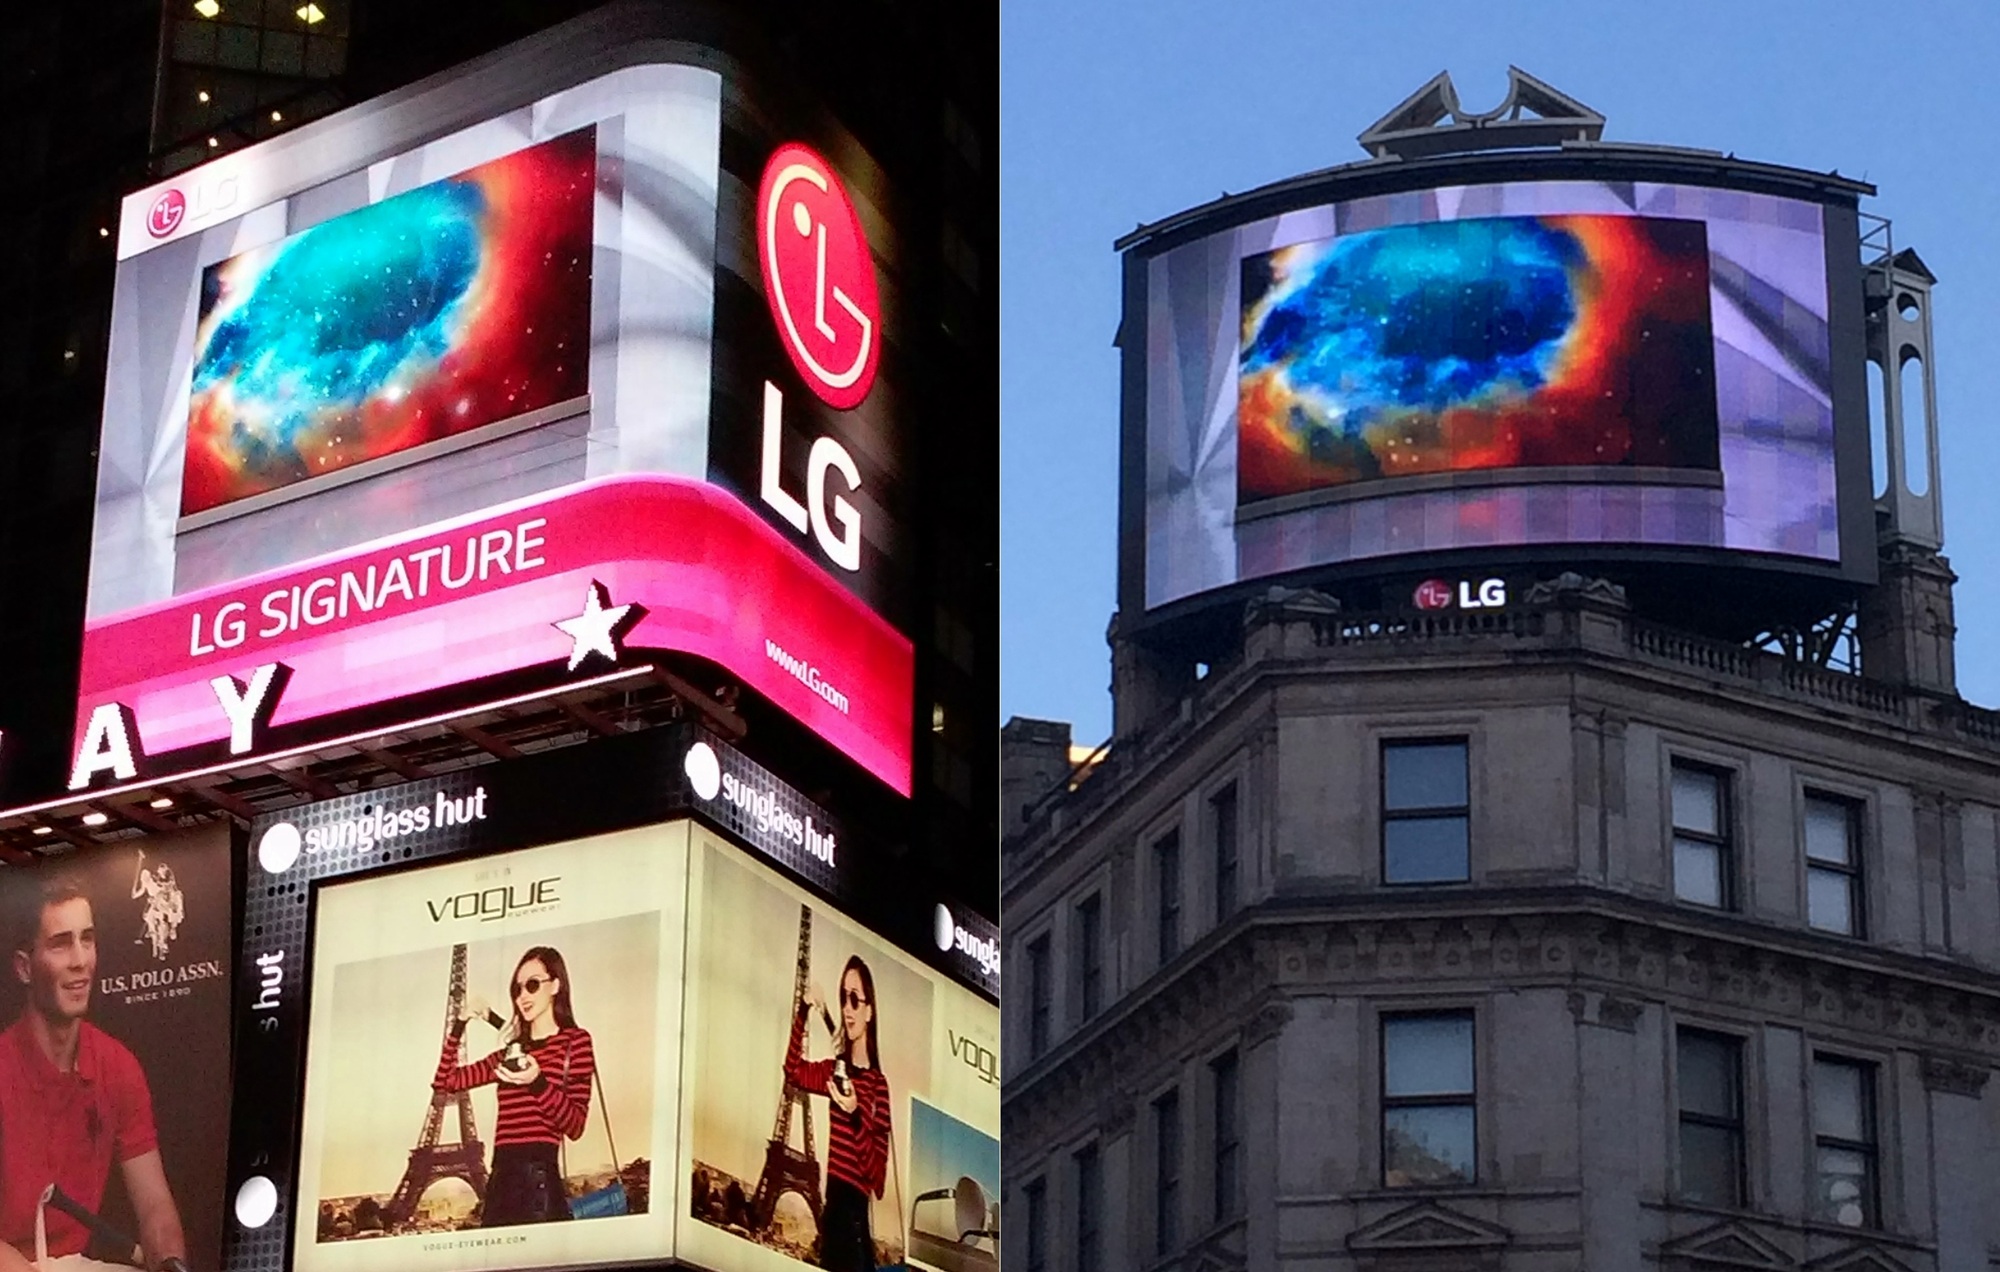 LG전자는 이달 초부터 미국 뉴욕 타임스퀘어와 영국 런던 피카딜리 광장의 LED 전광판에 LG 시그니처 광고를 상영하고 있다고 17일 밝혔다. << LG전자 제공 >>